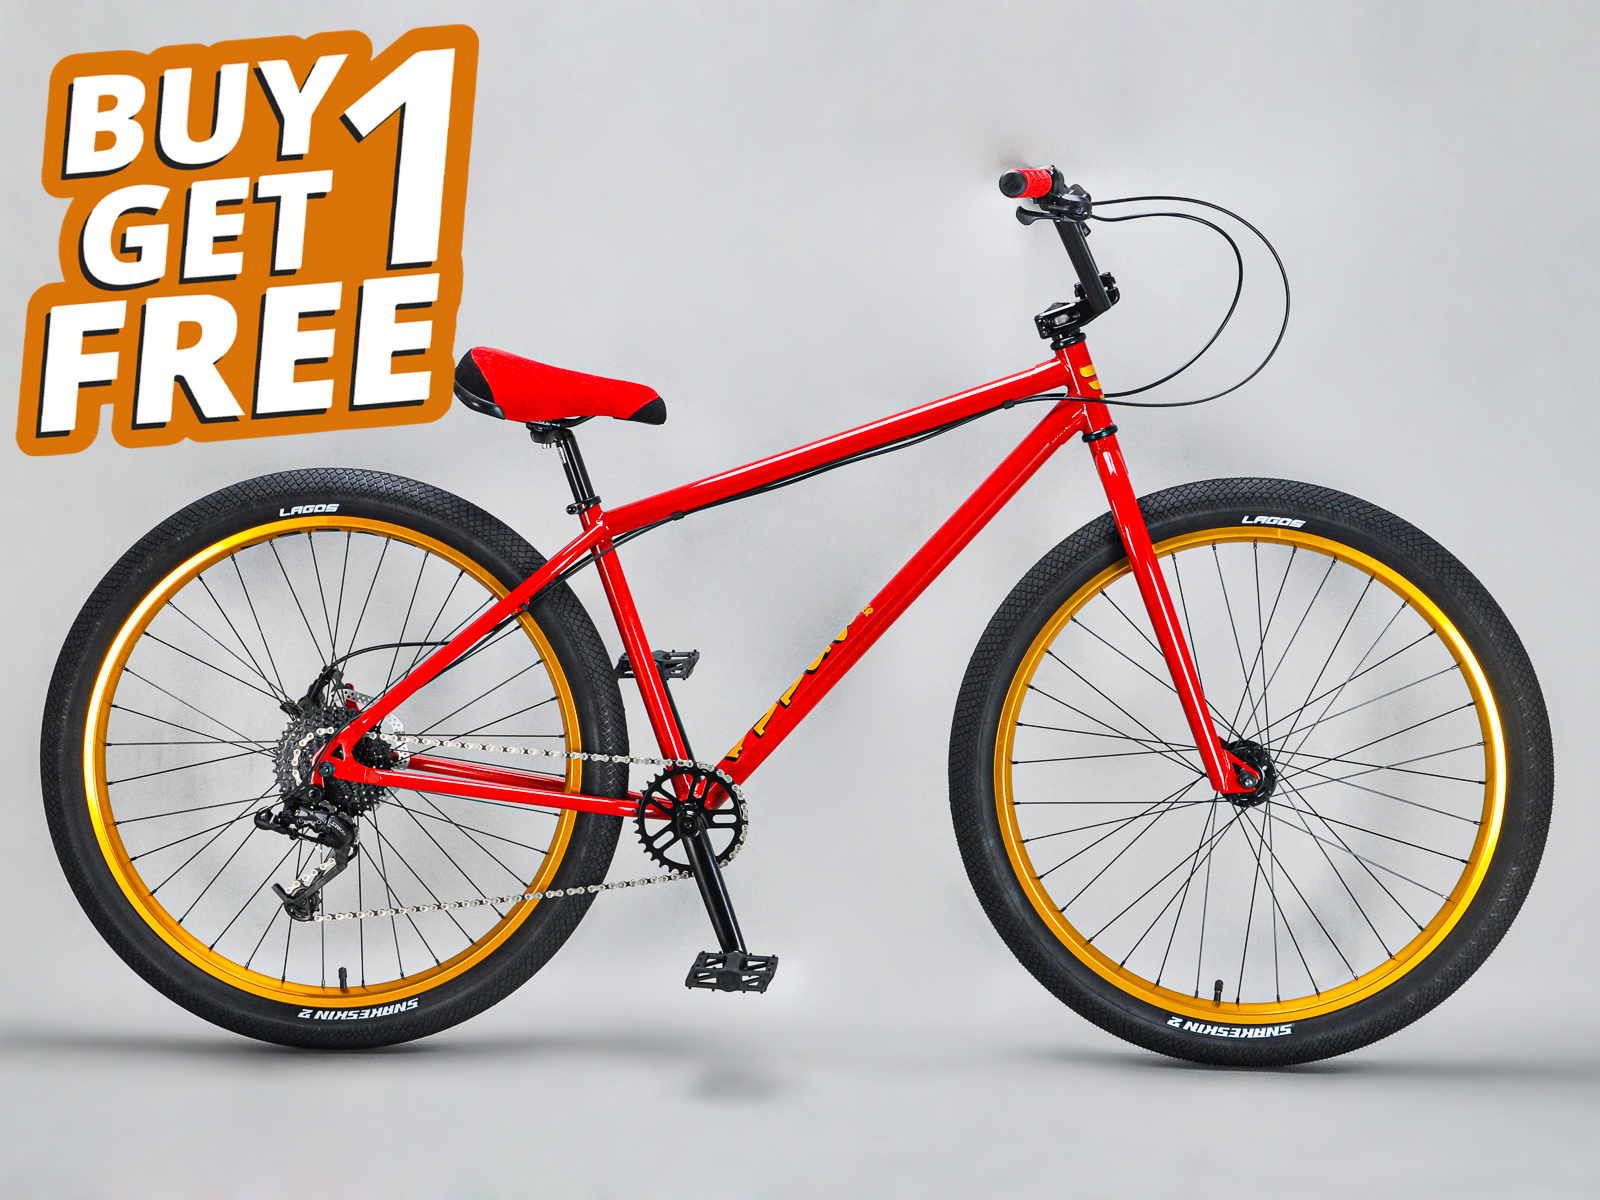 Mafia bikes deals and discounts - Bogof, half price sale and more!